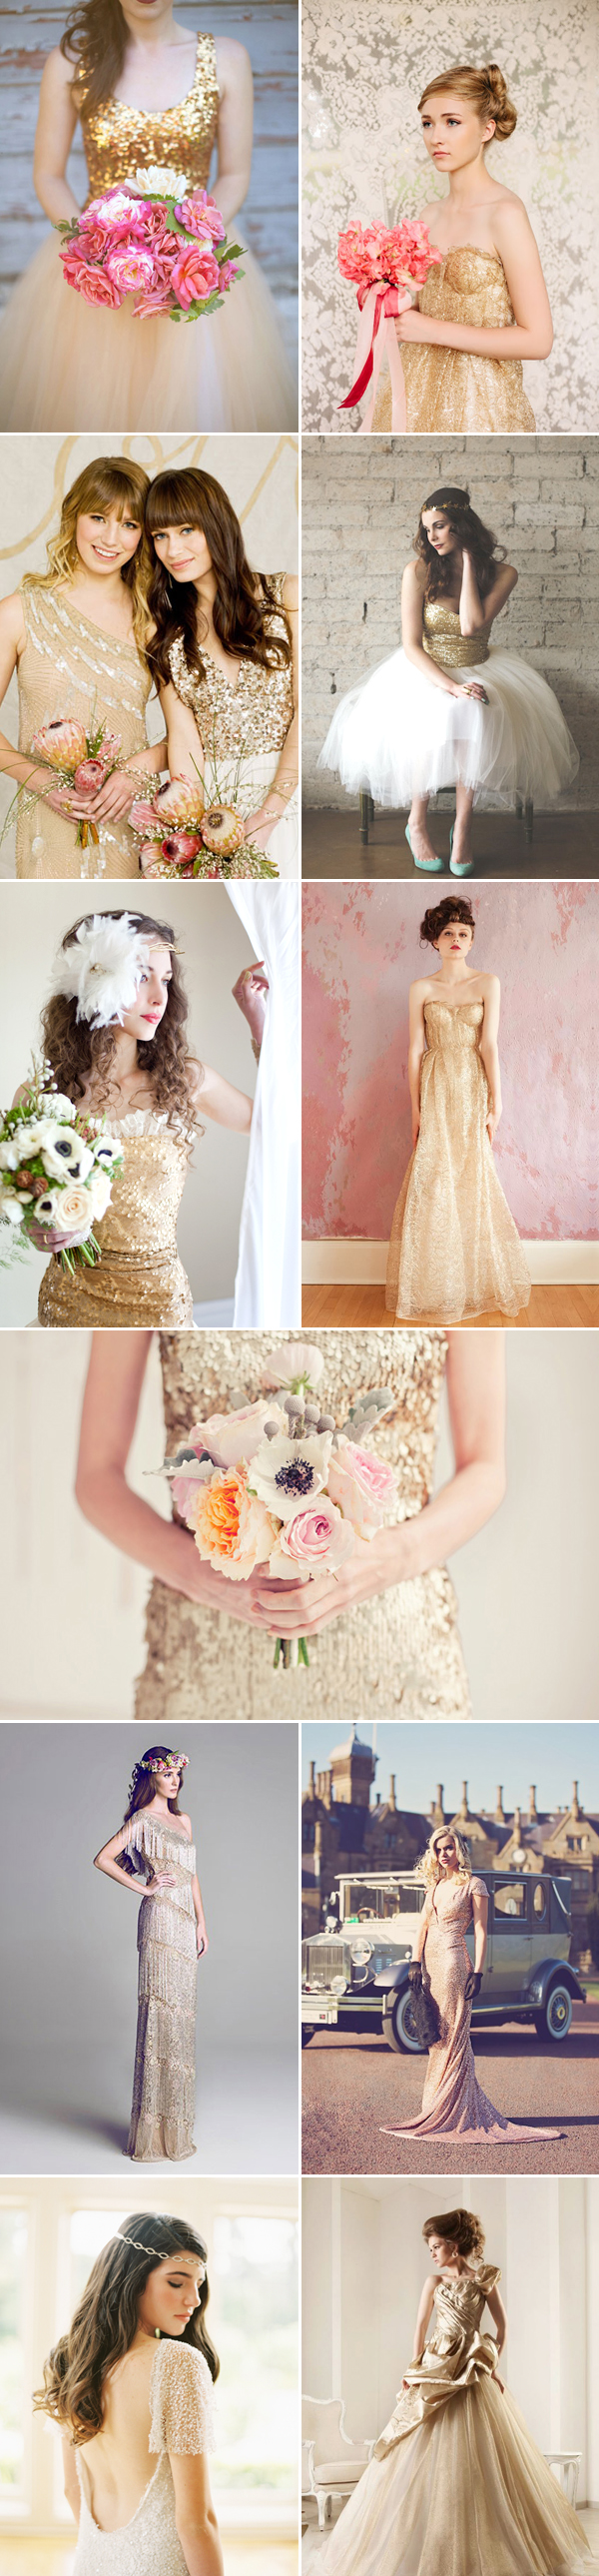 Color wedding dresses03-gold